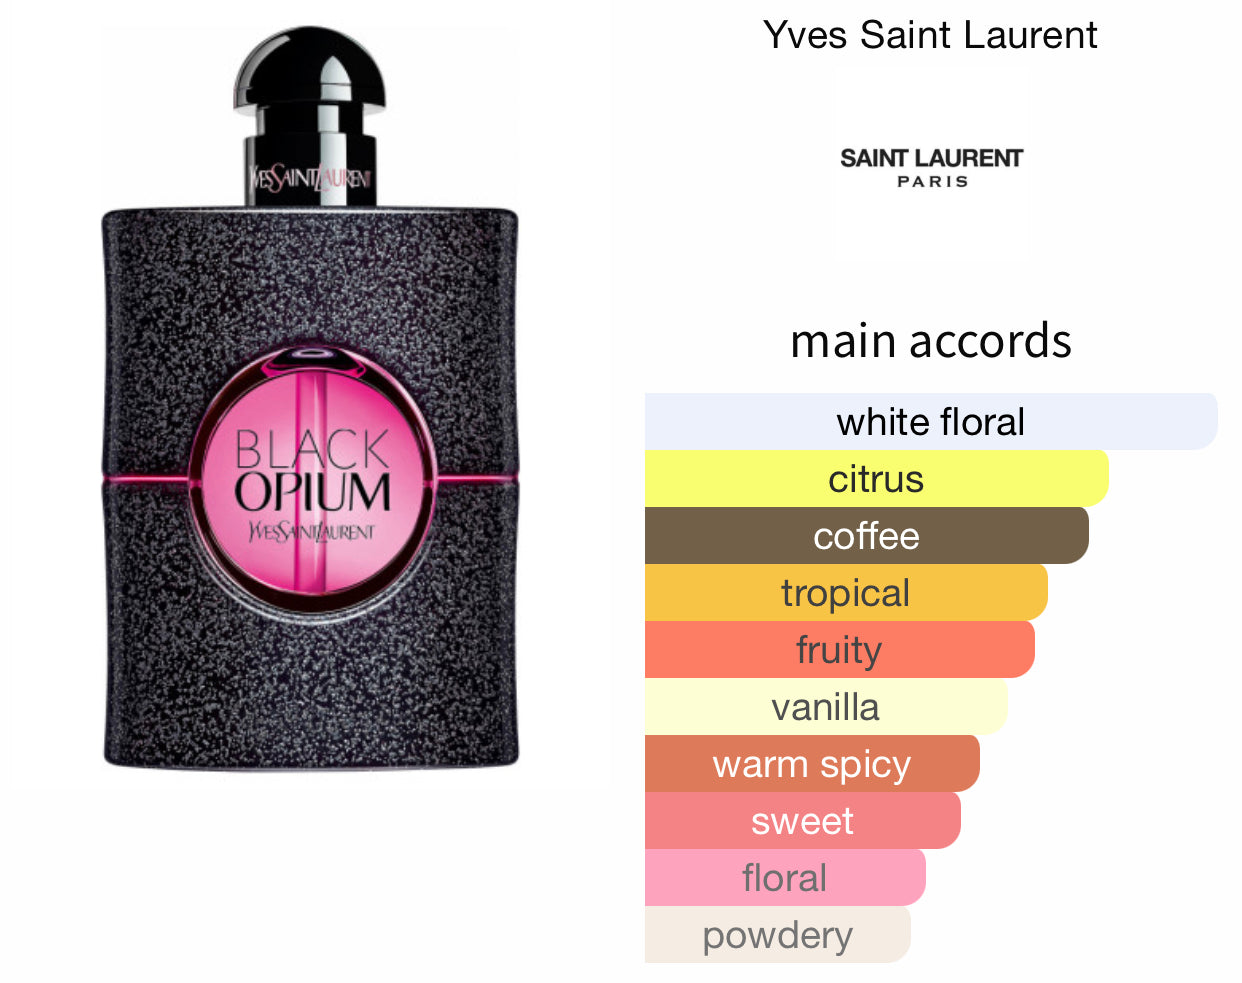 Inspired by Black Opium Neon Eau De Parfum